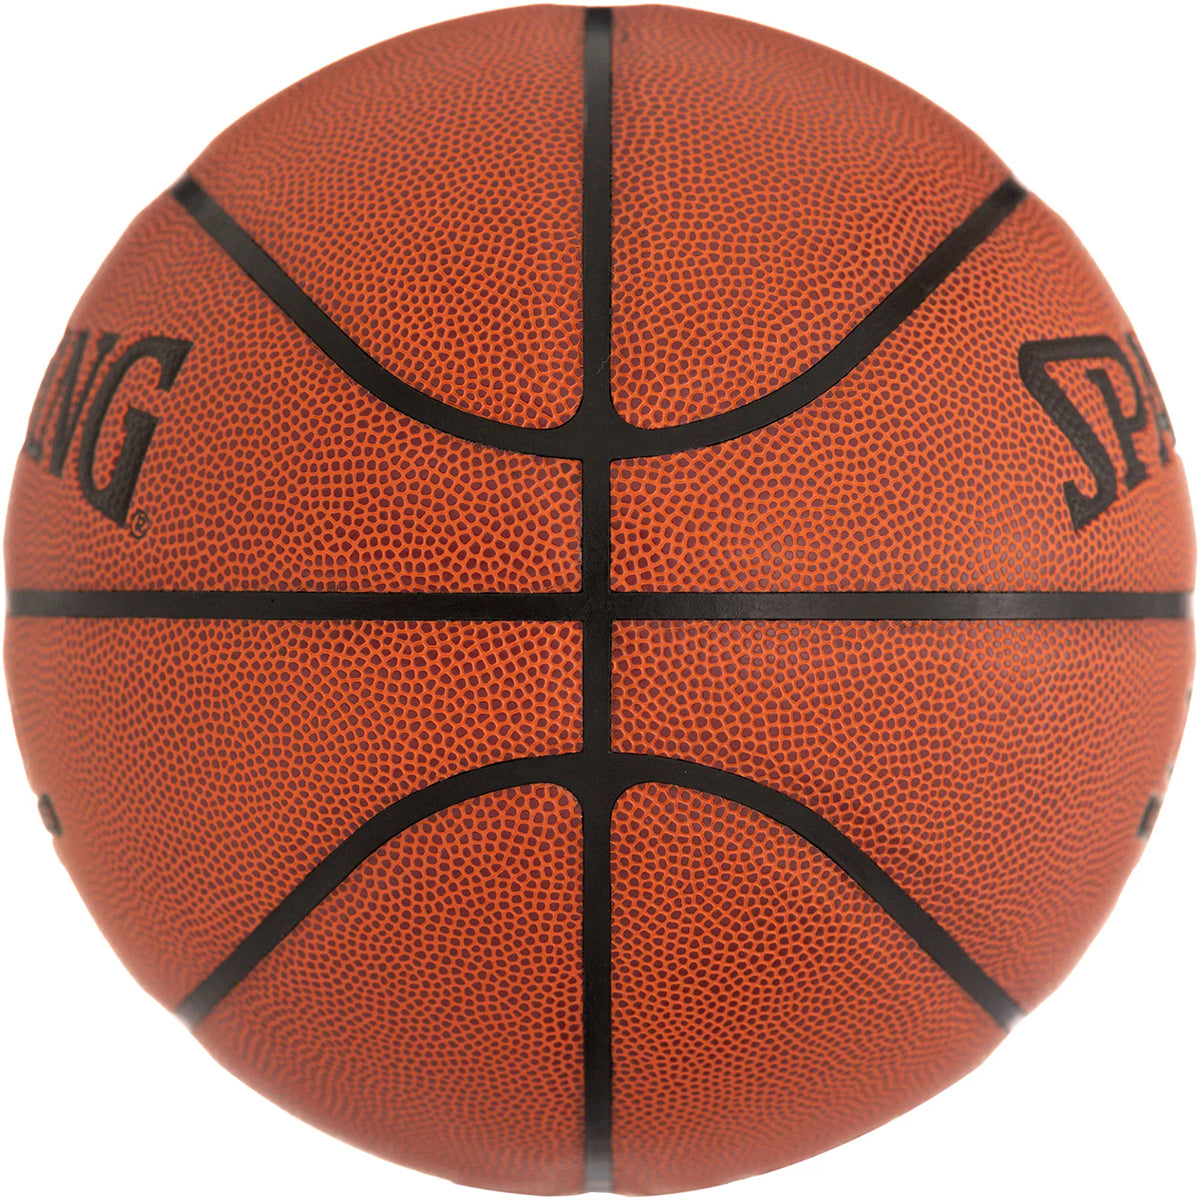 Spalding Zi/O Indoor/Outdoor Basketball - Orange Spalding